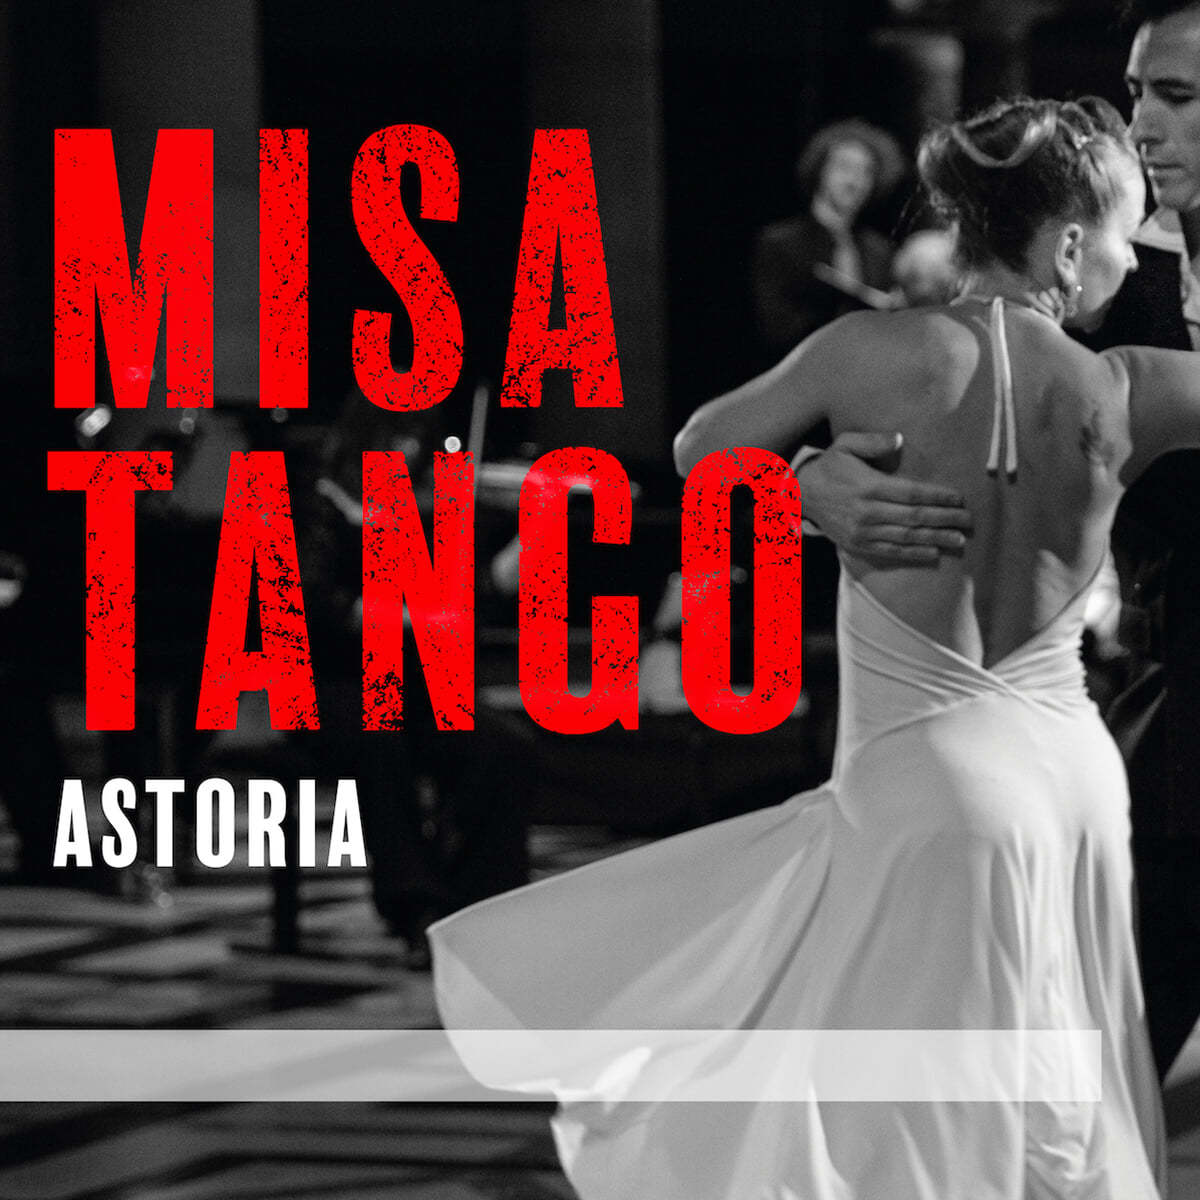 Ensemble Astoria 마르틴 팔메리: 미사 탱고 (Martin Palmeri: Misa Tango) 